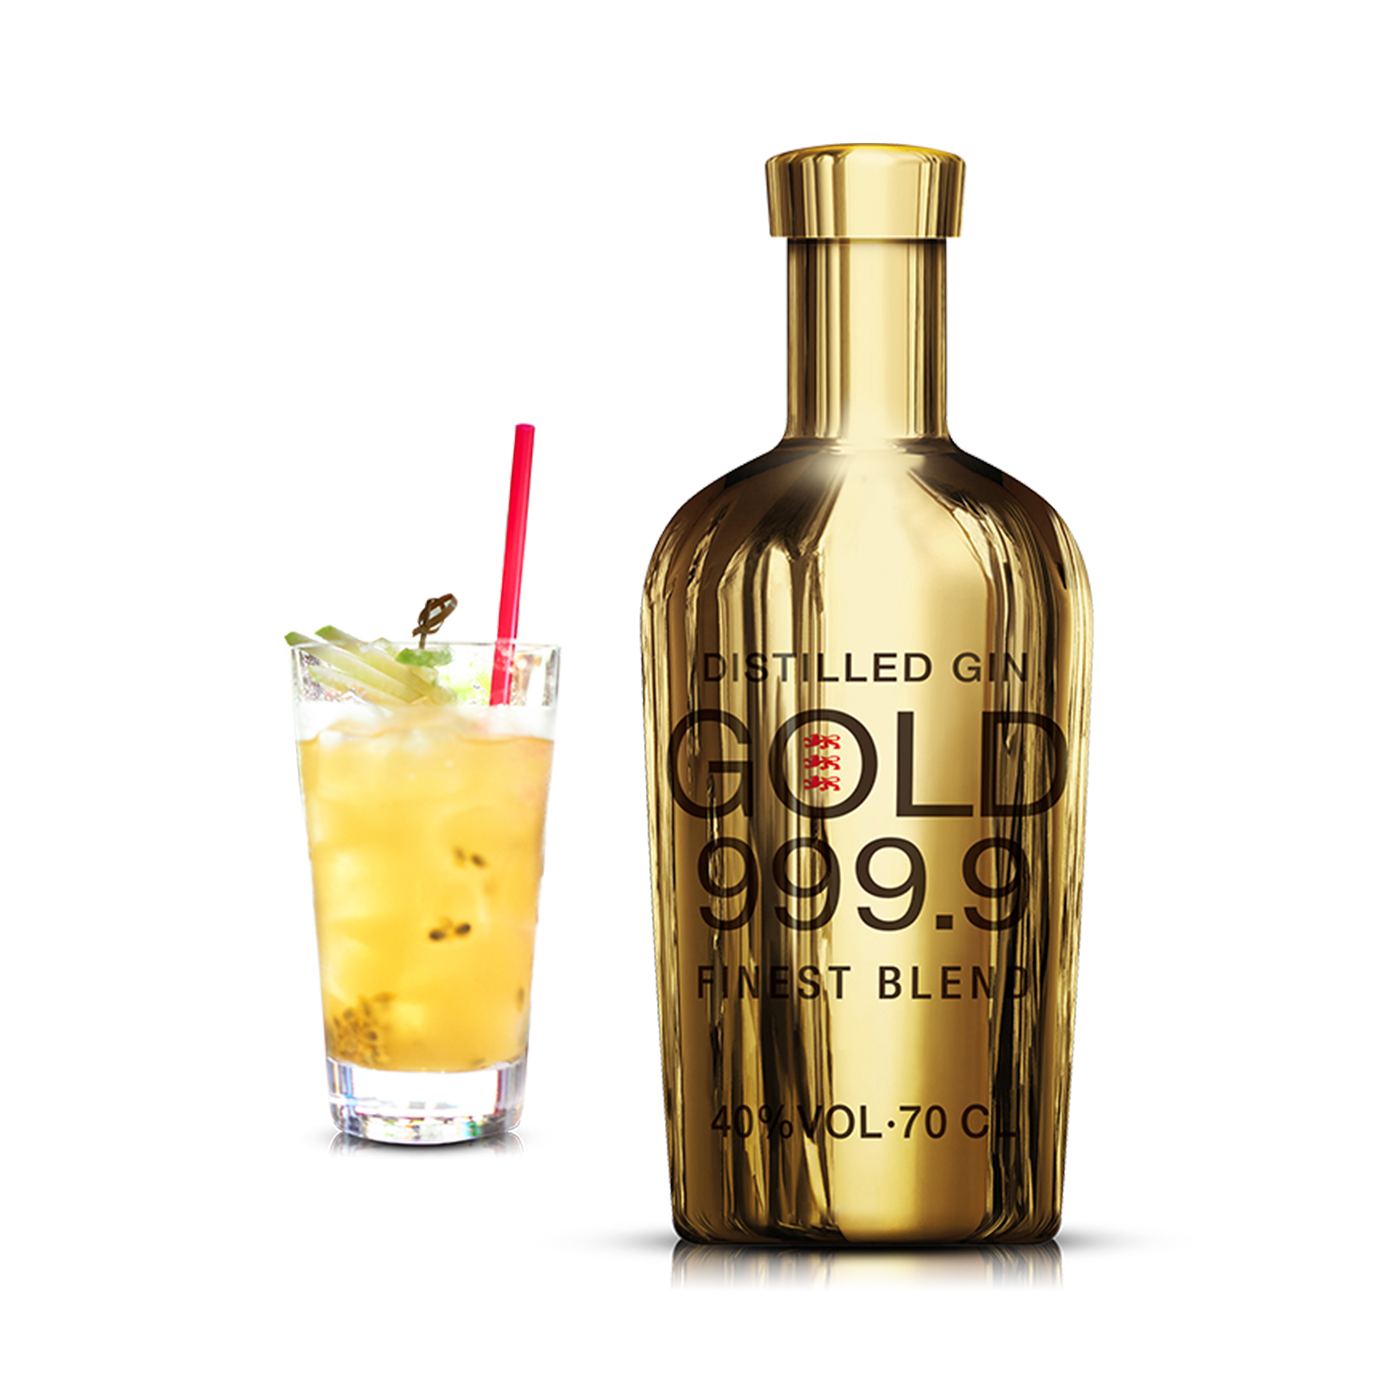 Glod-999.9-cocktail-gold